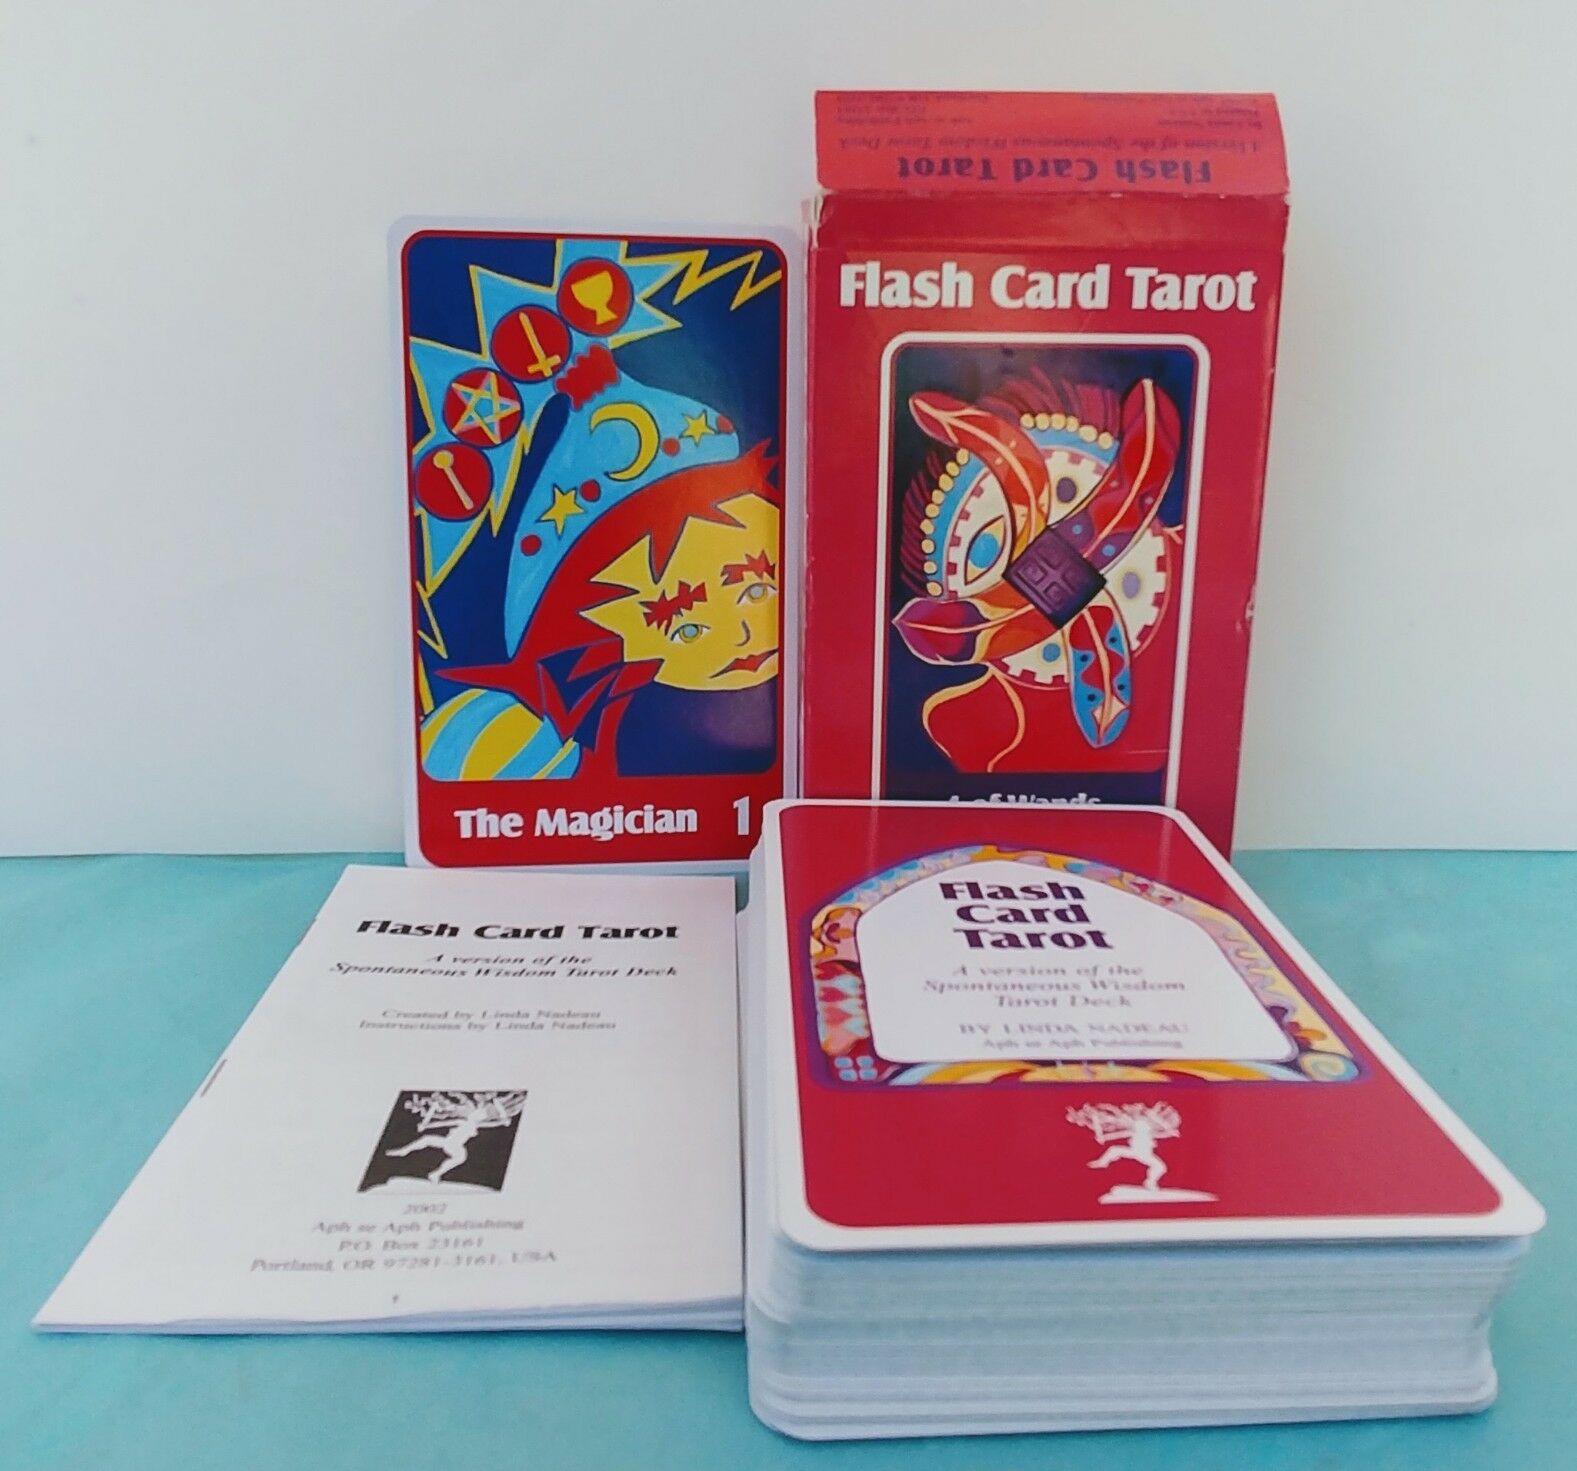 Flash Card Tarot